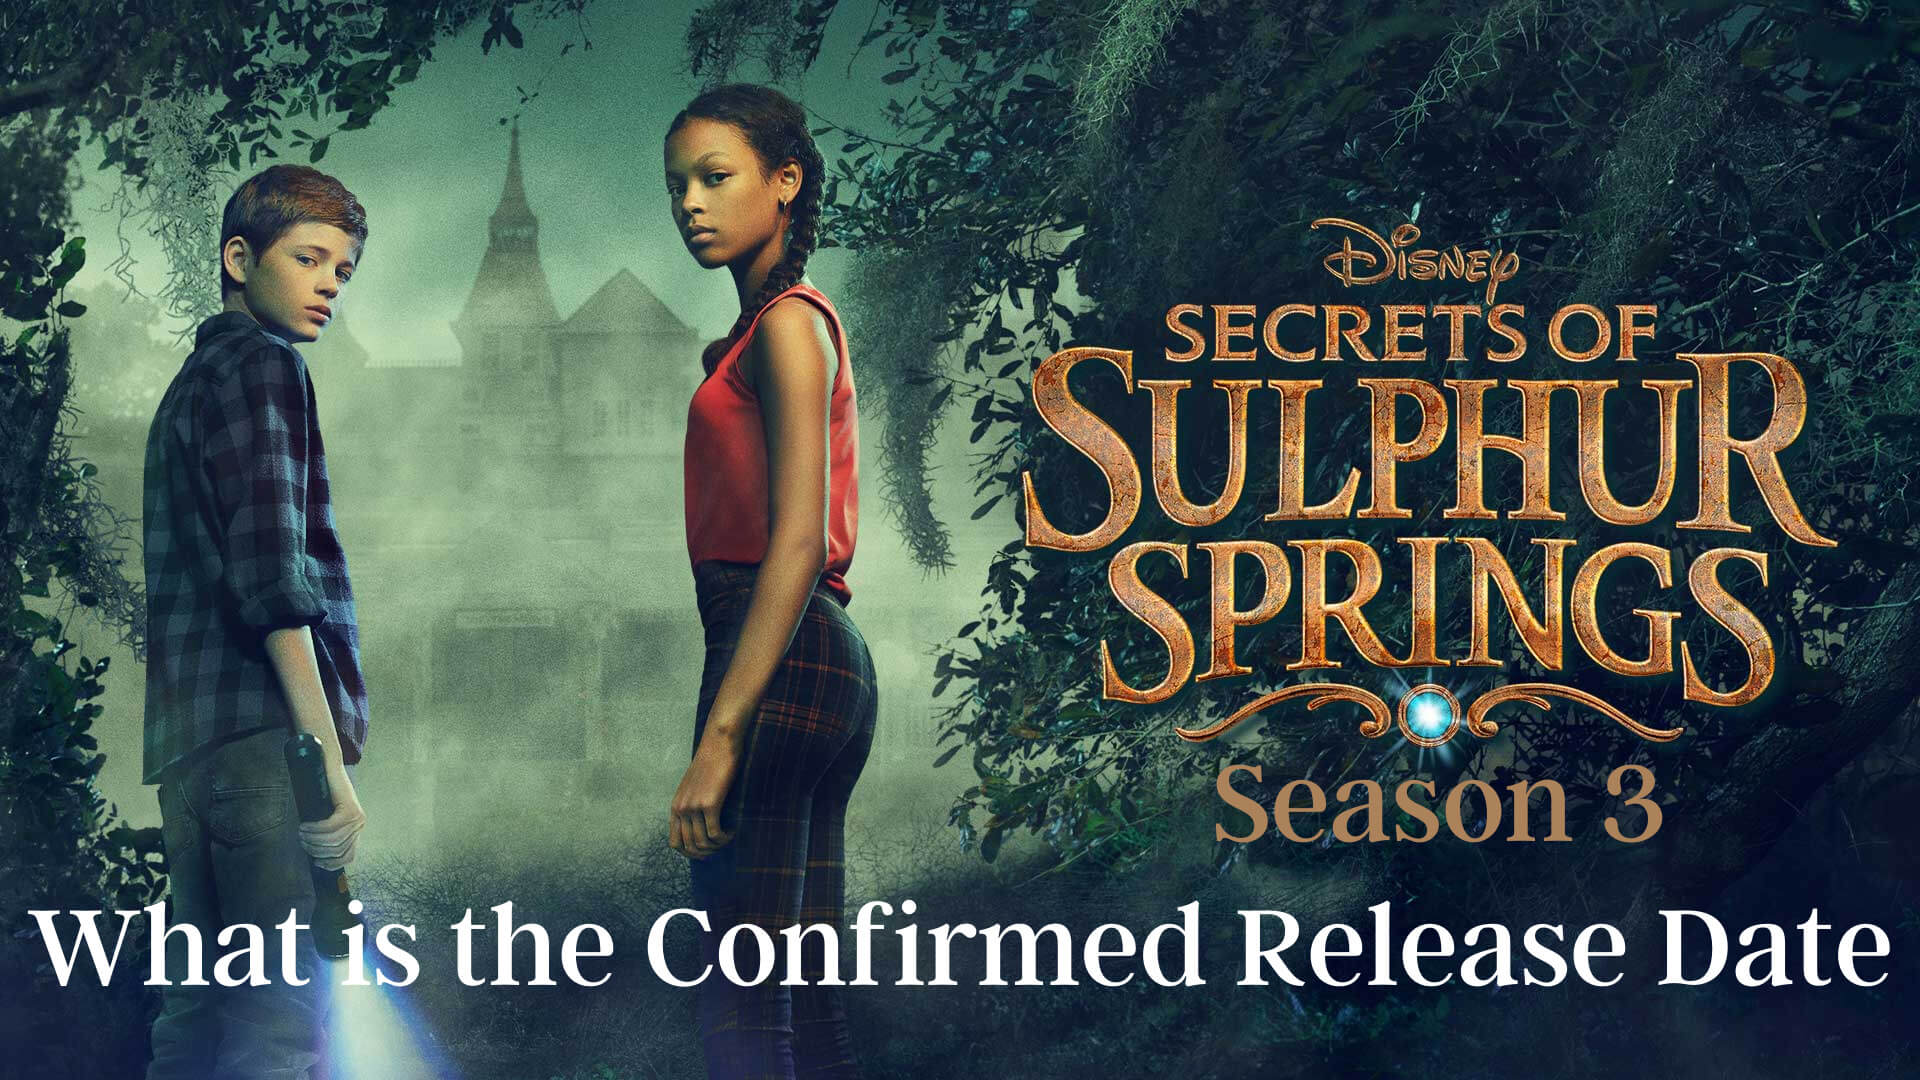 Secrets Of Sulphur Springs Season 3 ⇒ News, Release Date, Cast